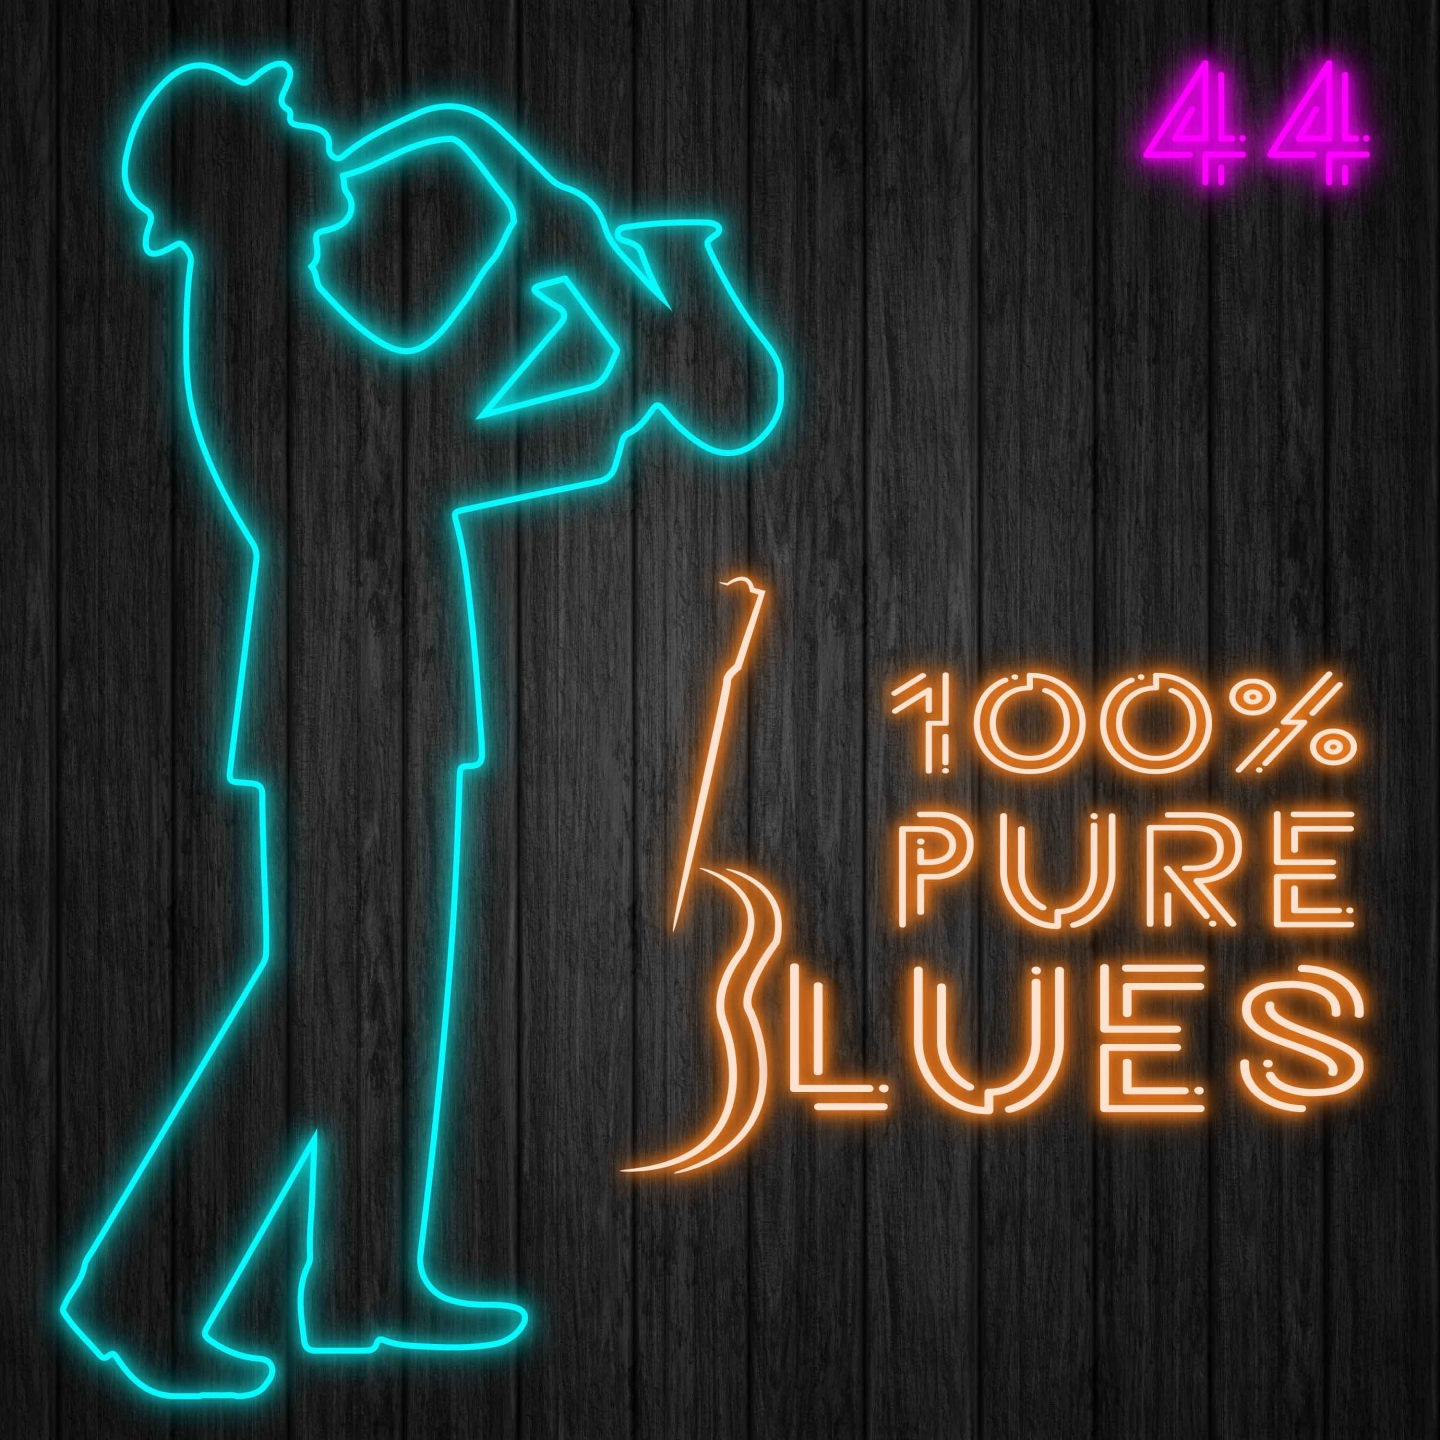 100% Pure Blues / 44